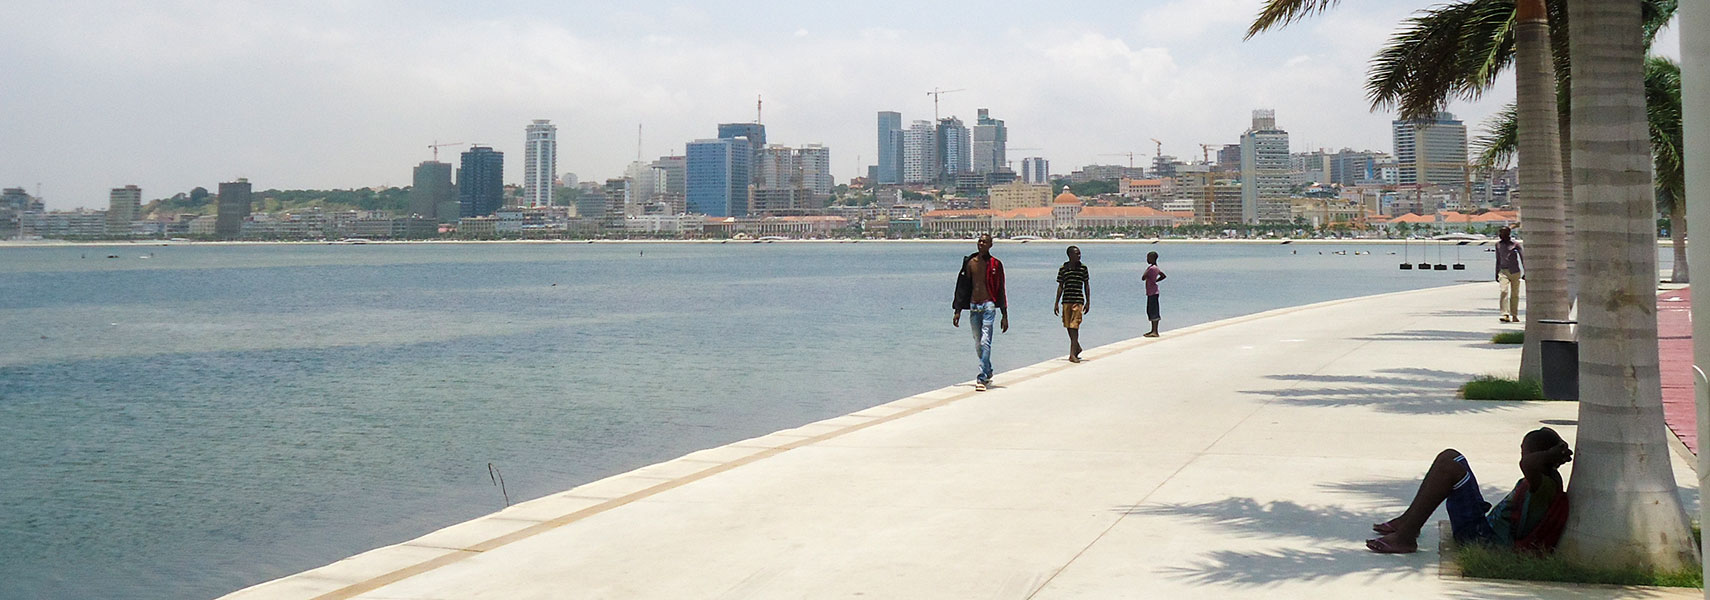 Avenida 4 de Fevreiro along Luanda Bay, Luanda, Angola